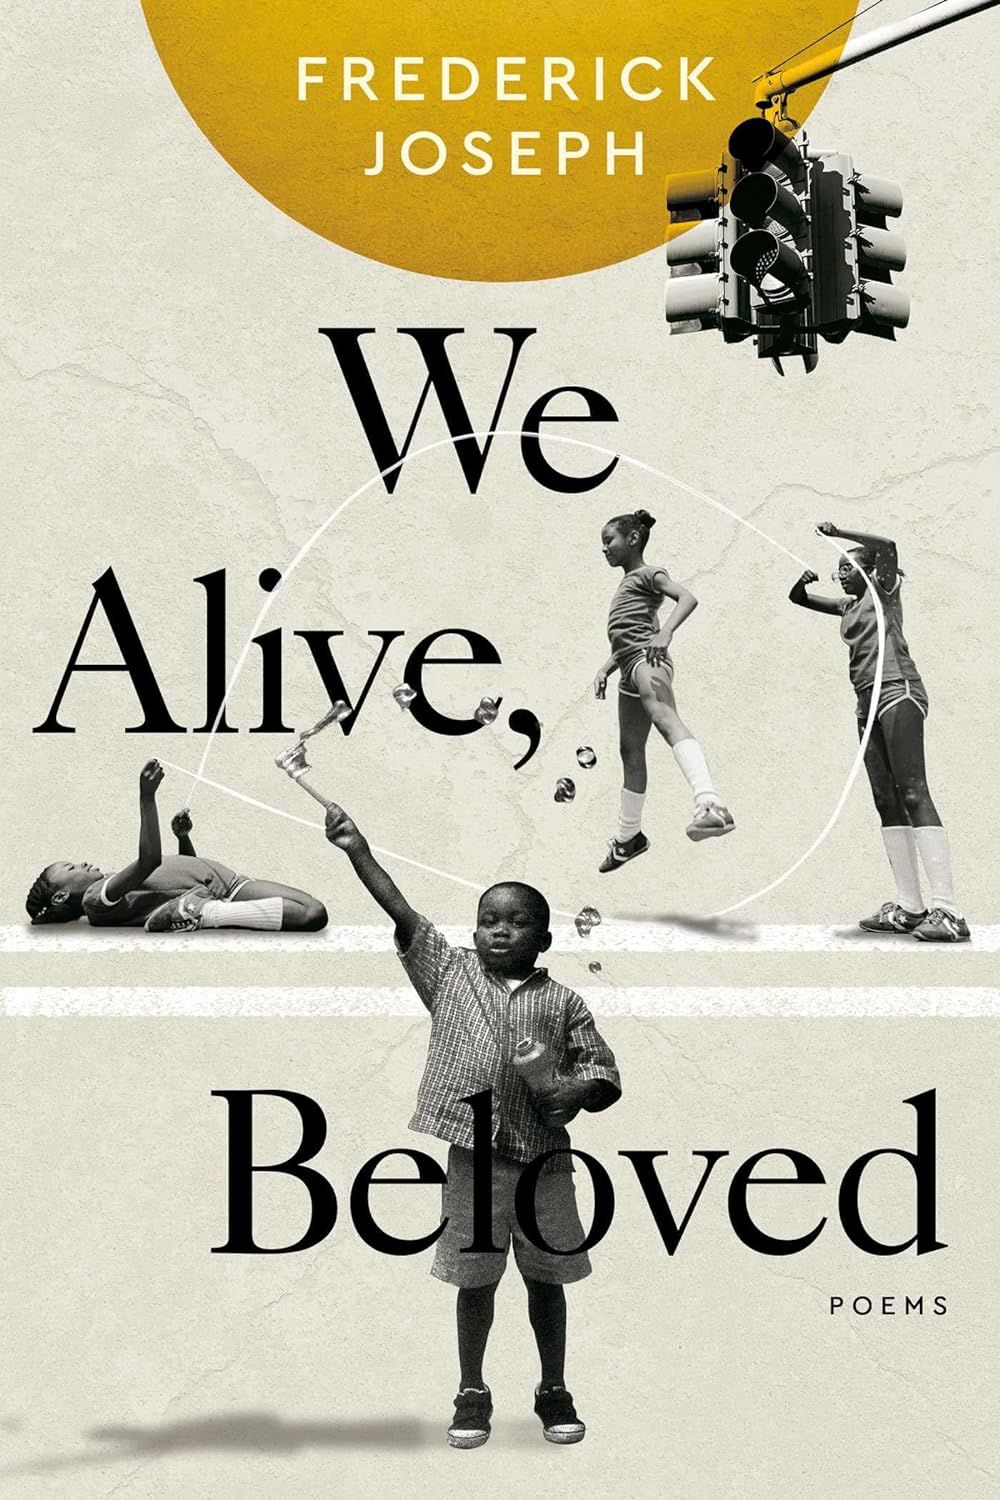 cover of We Alive, Beloved: Poems Frederick Joseph